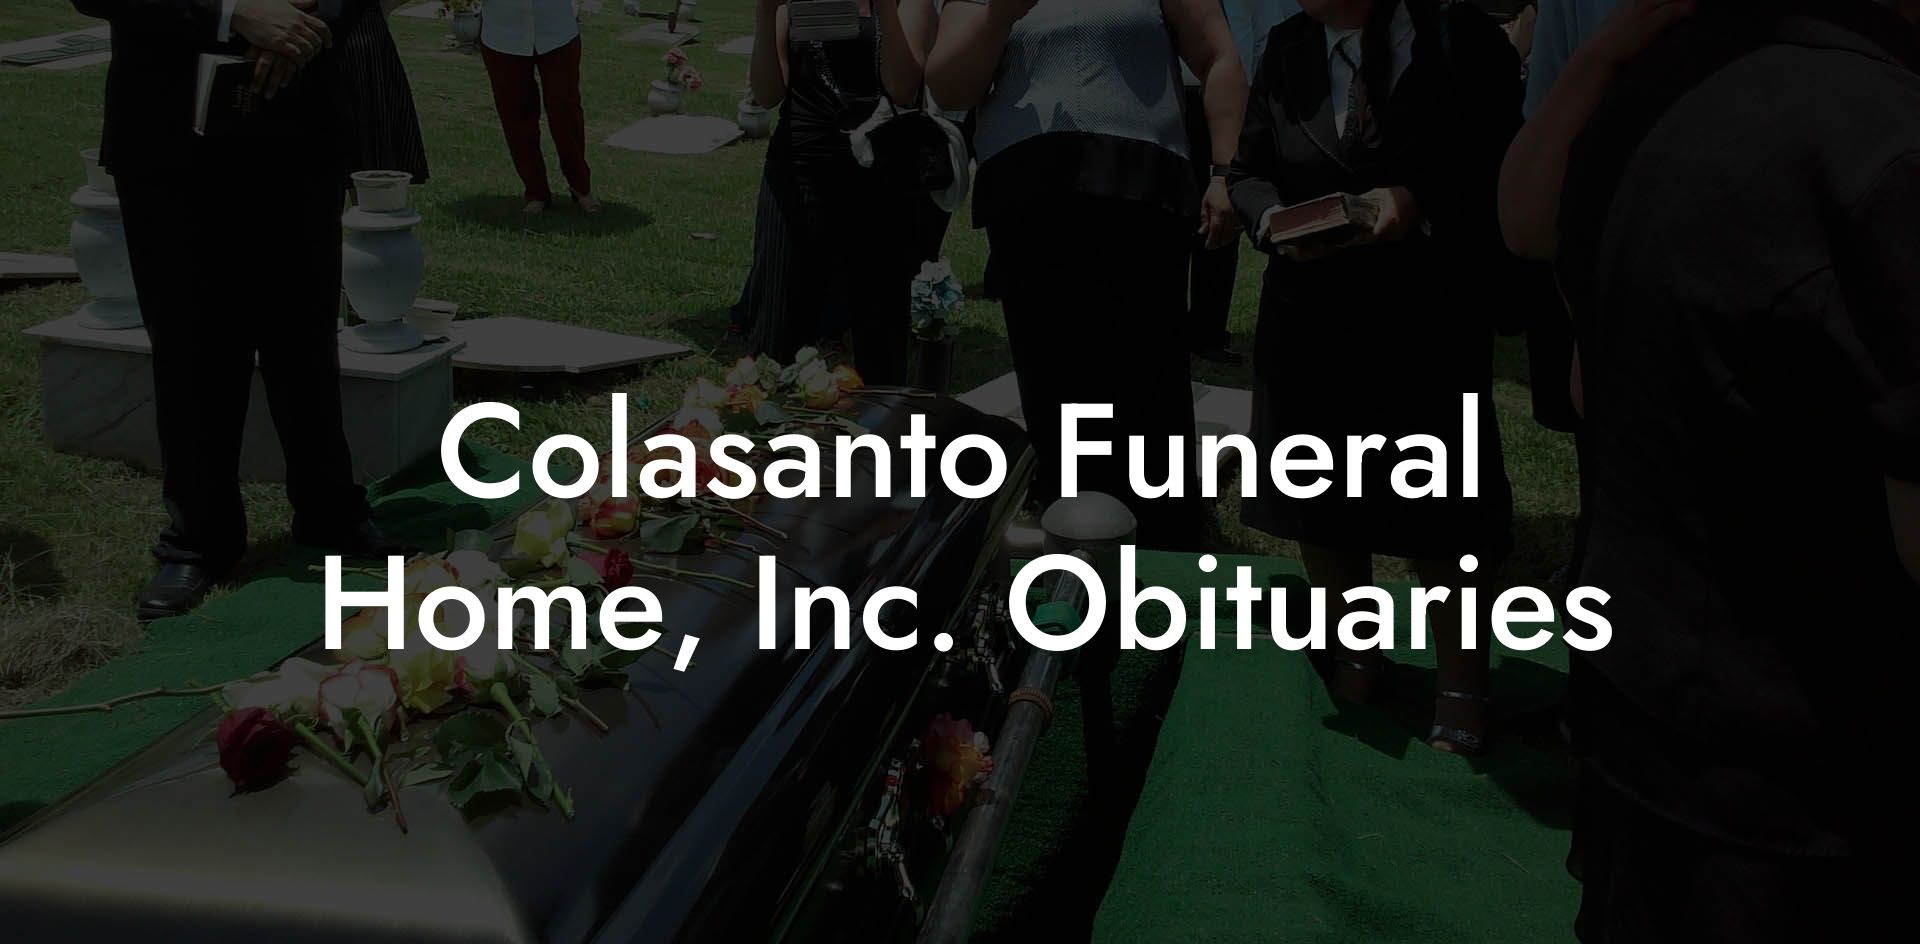 Colasanto Funeral Home, Inc. Obituaries